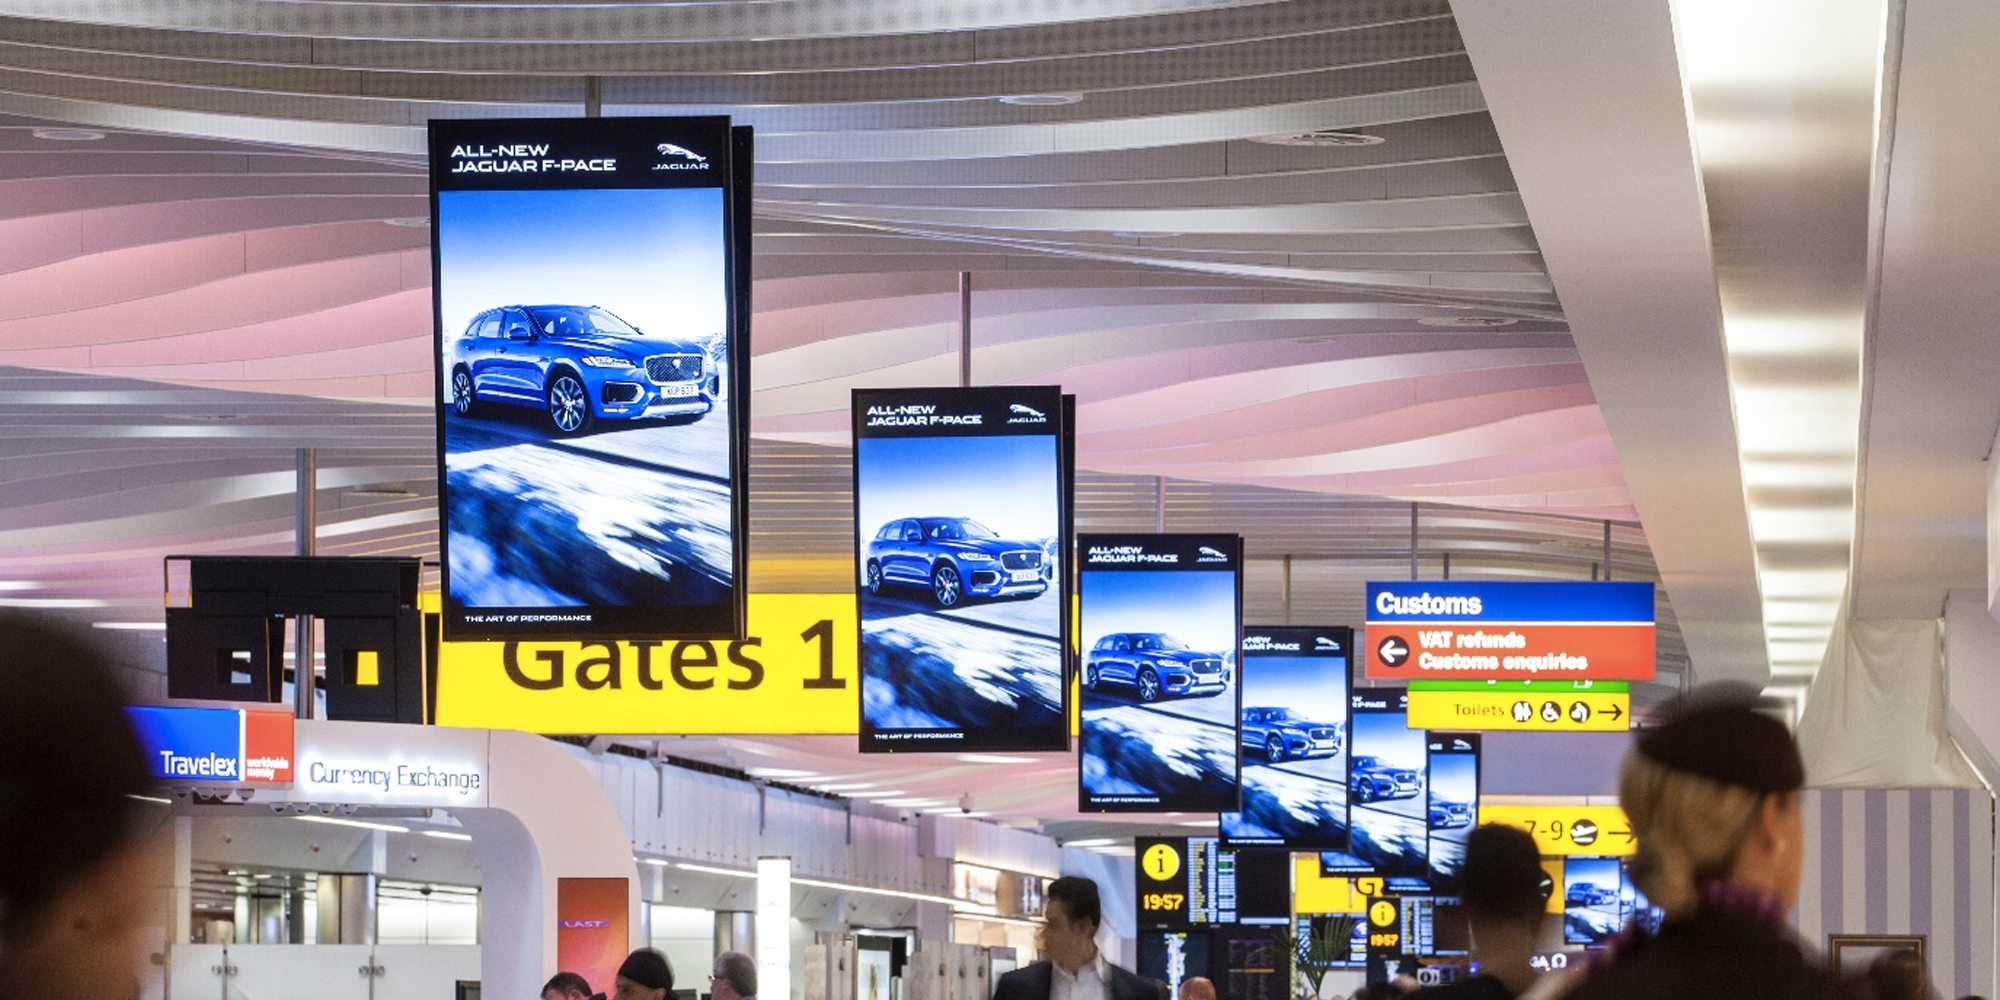 Advertising in airport gates